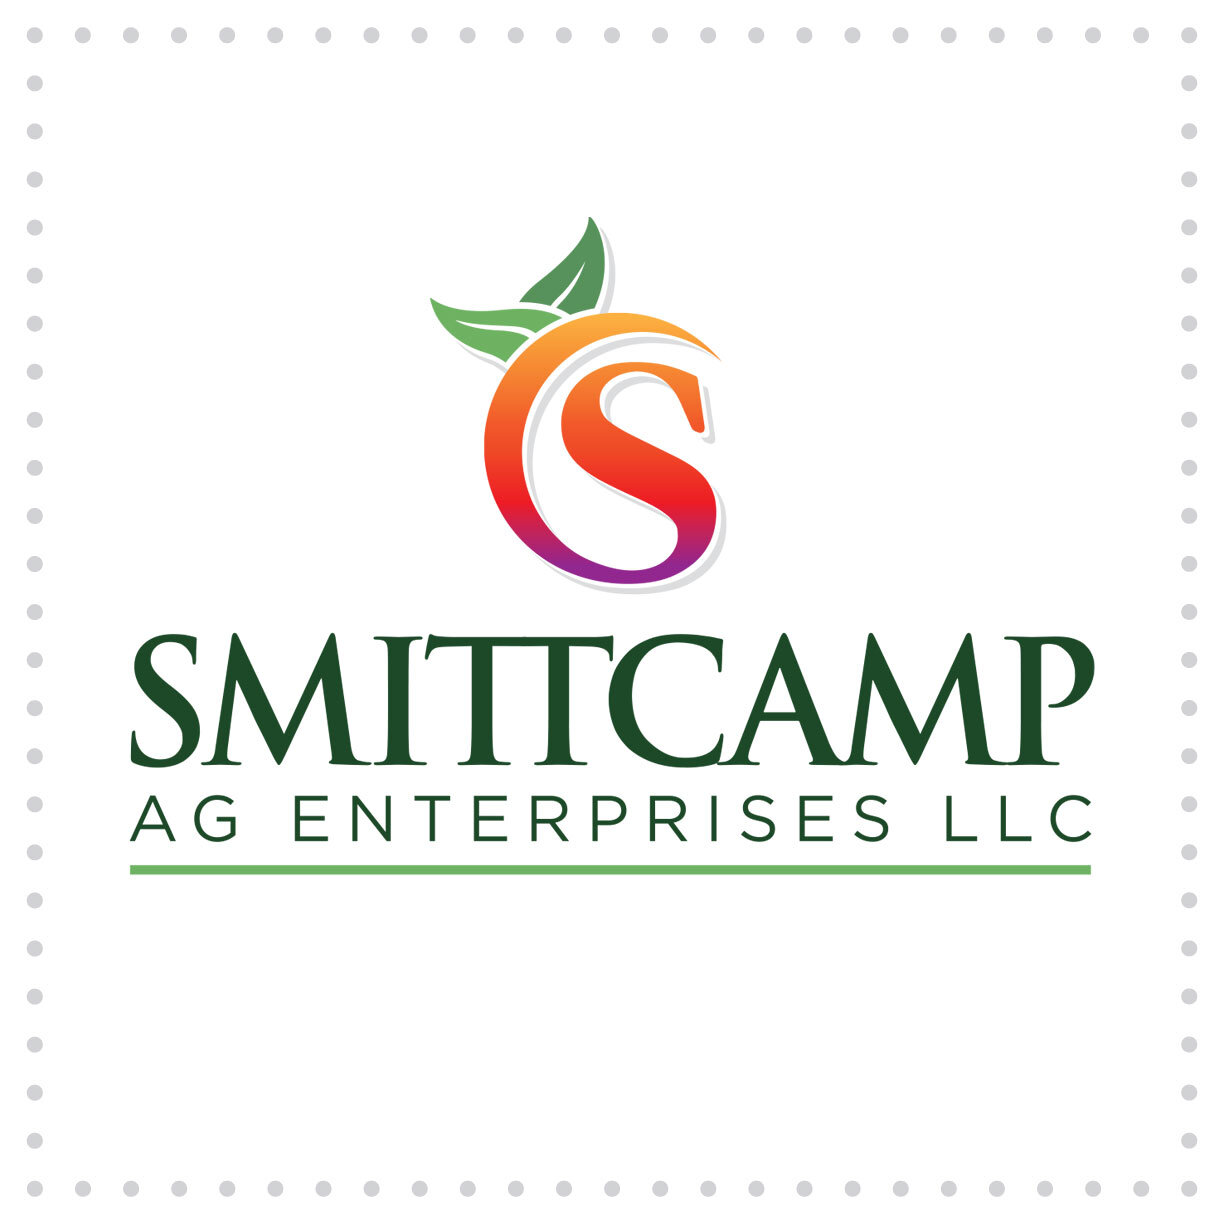 Ball-LogoDesign-SmittcampAgEnterprises.jpg